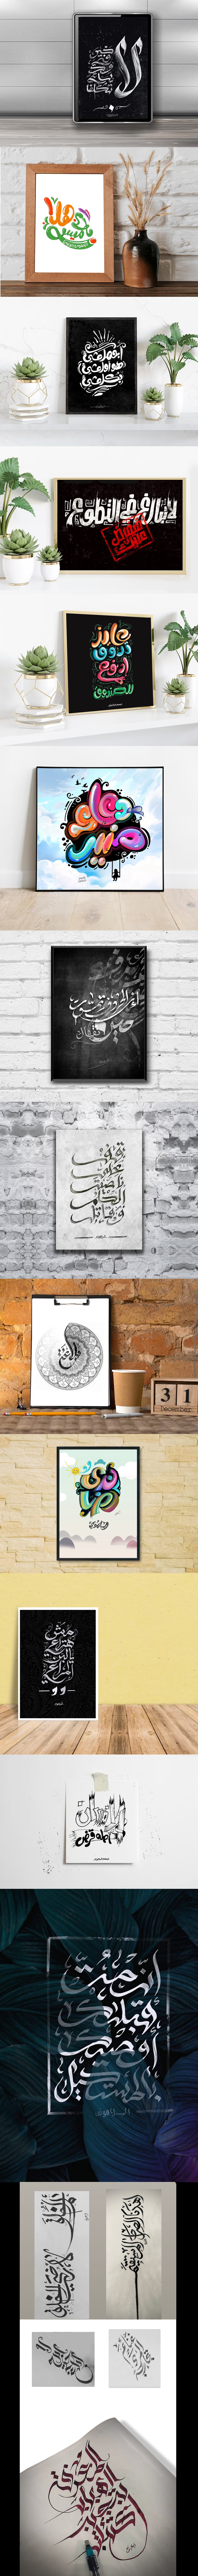 arabic calligraphy Logotype typography   تعريب، typography تيابوجرافيك تيبوجرافي خط حر خط عربي قلم رصاص كاليجرافي